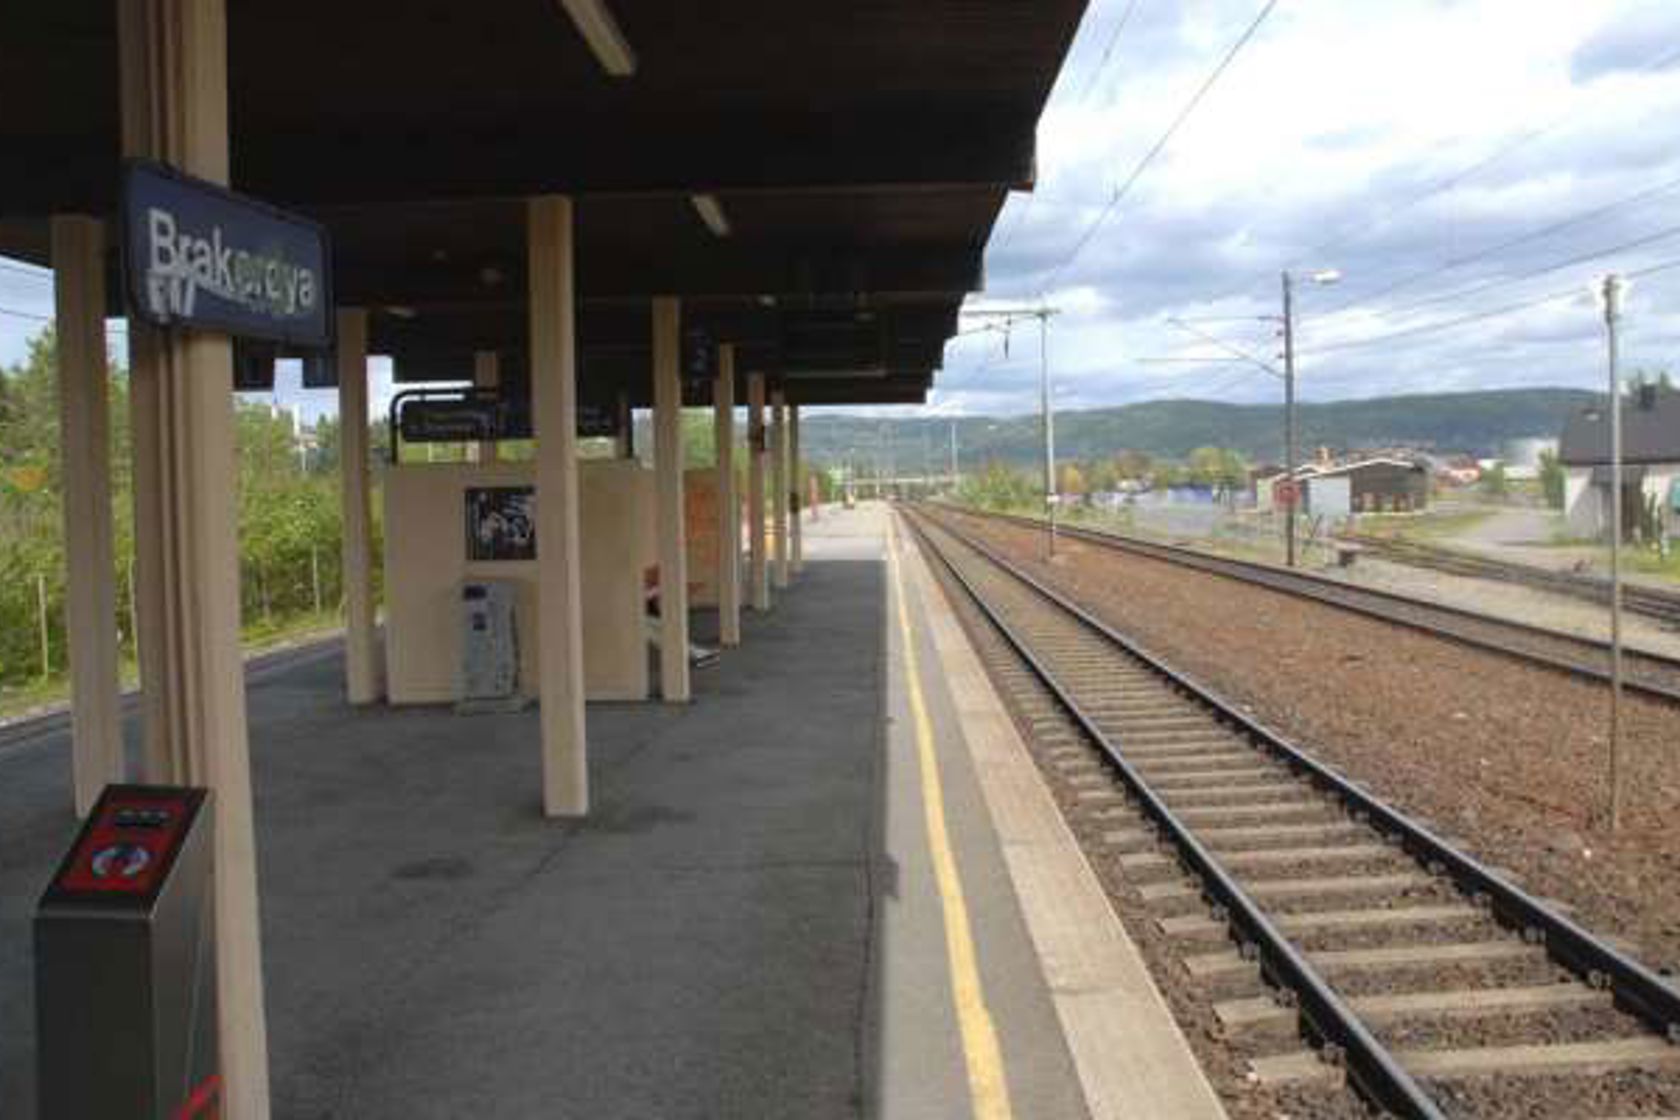 Exterior view of Brakerøya station